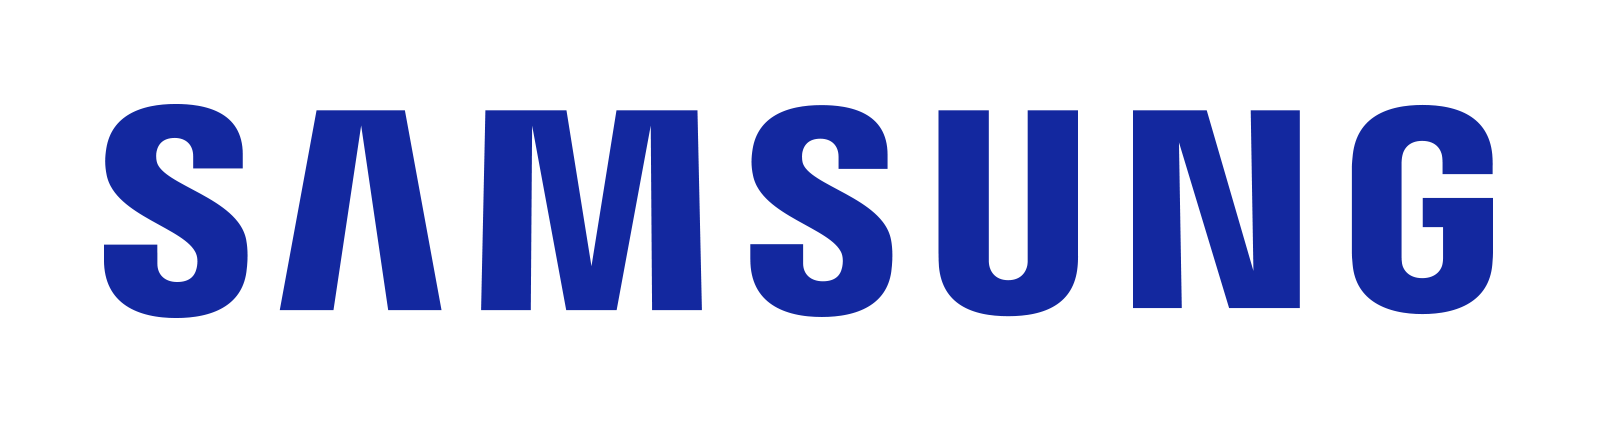 Samsung Logo: Recognizable emblem of the Samsung brand